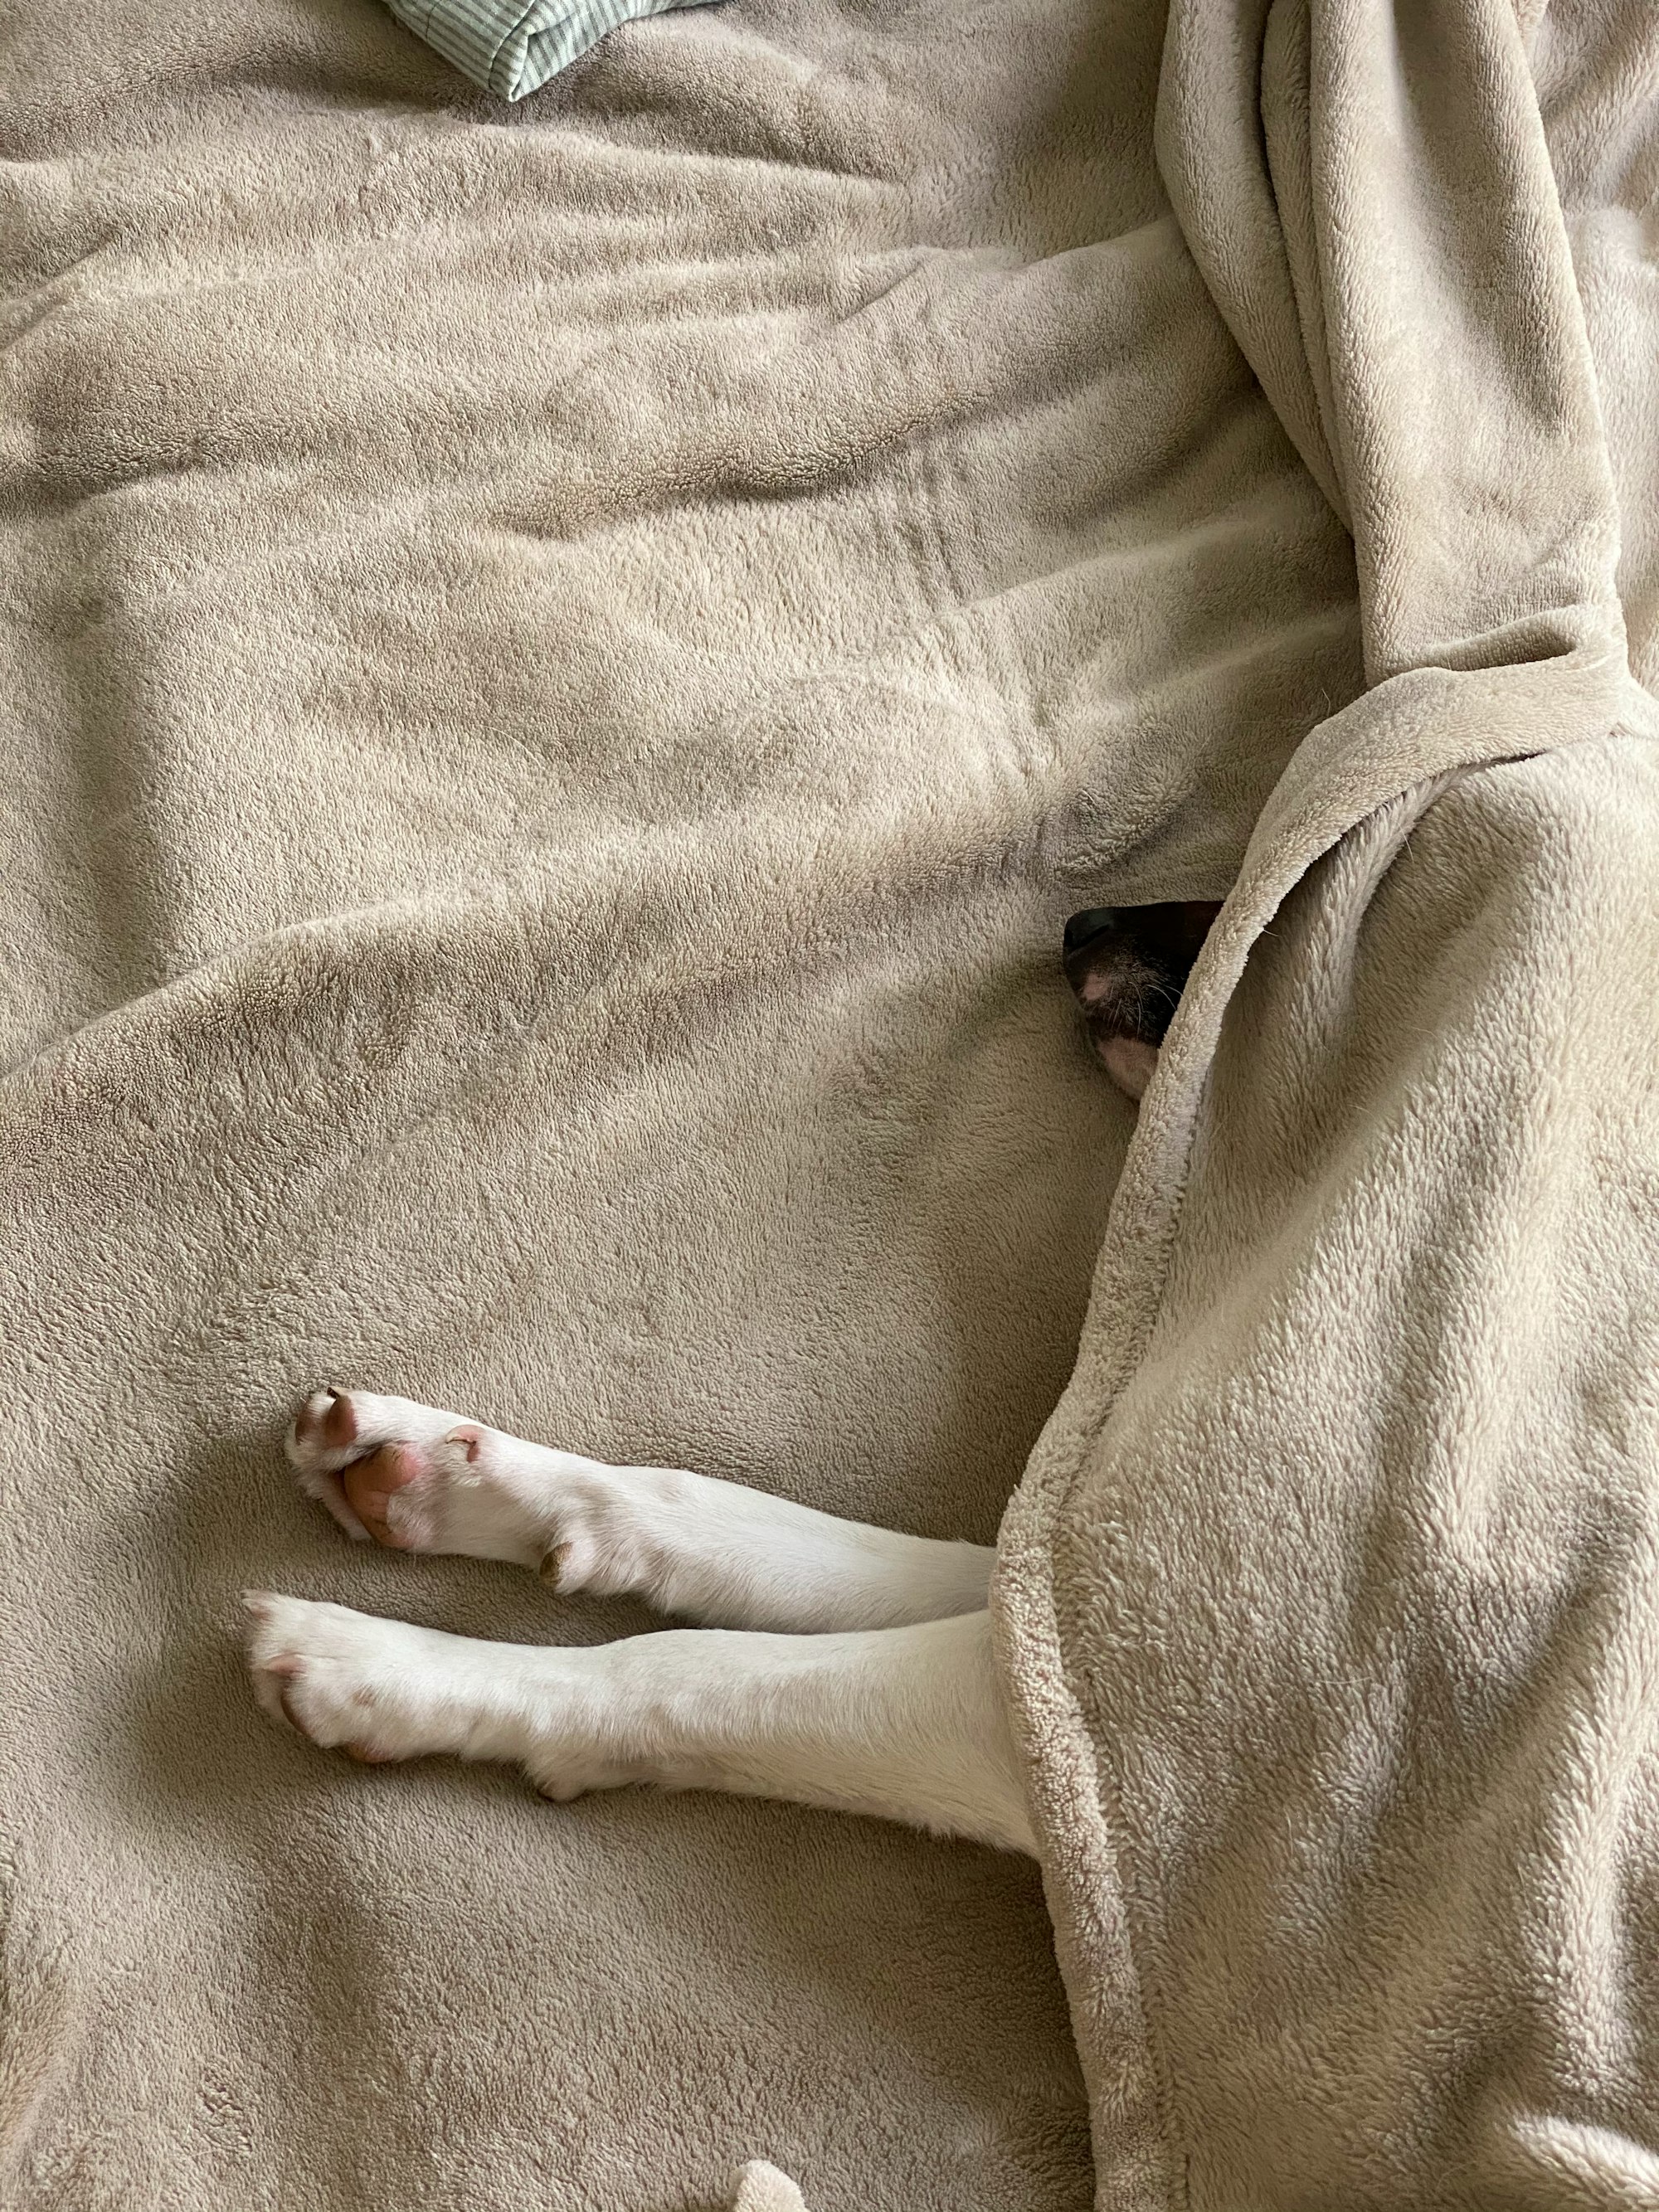 Sleeping dog under the blanket. 